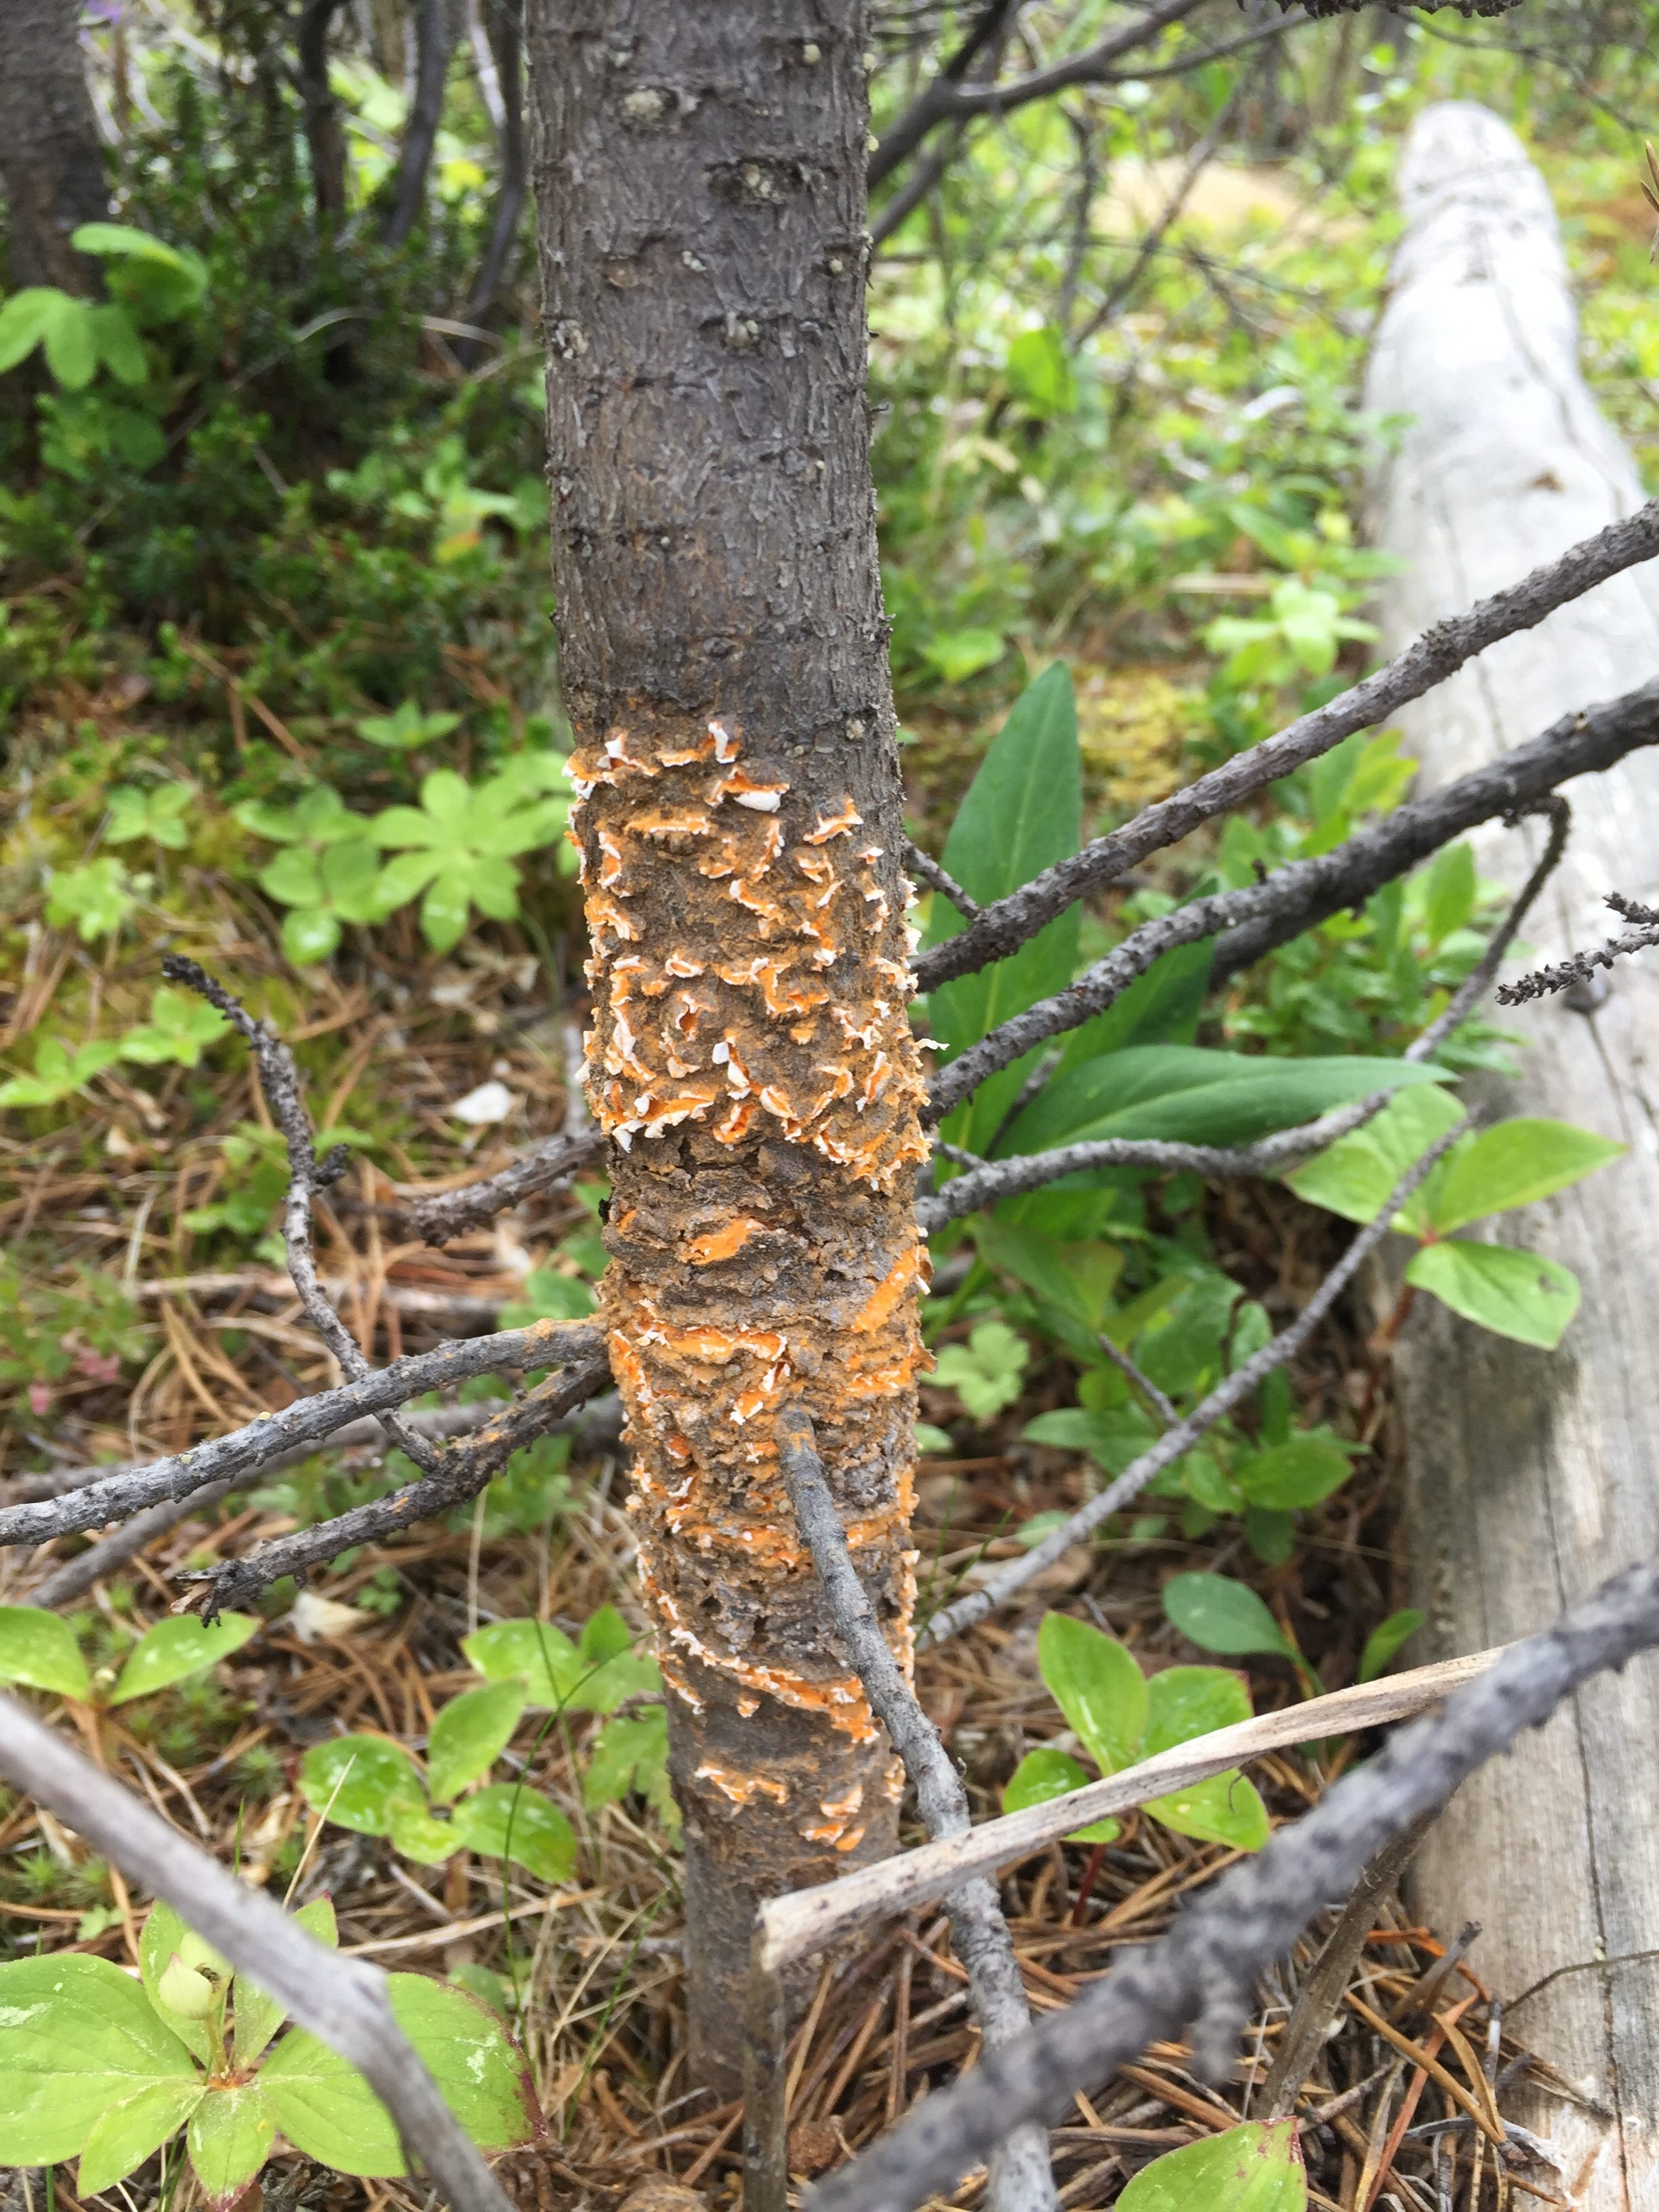 Comandra blister rust cause by Cronartium comandrae on lodgepole pine.